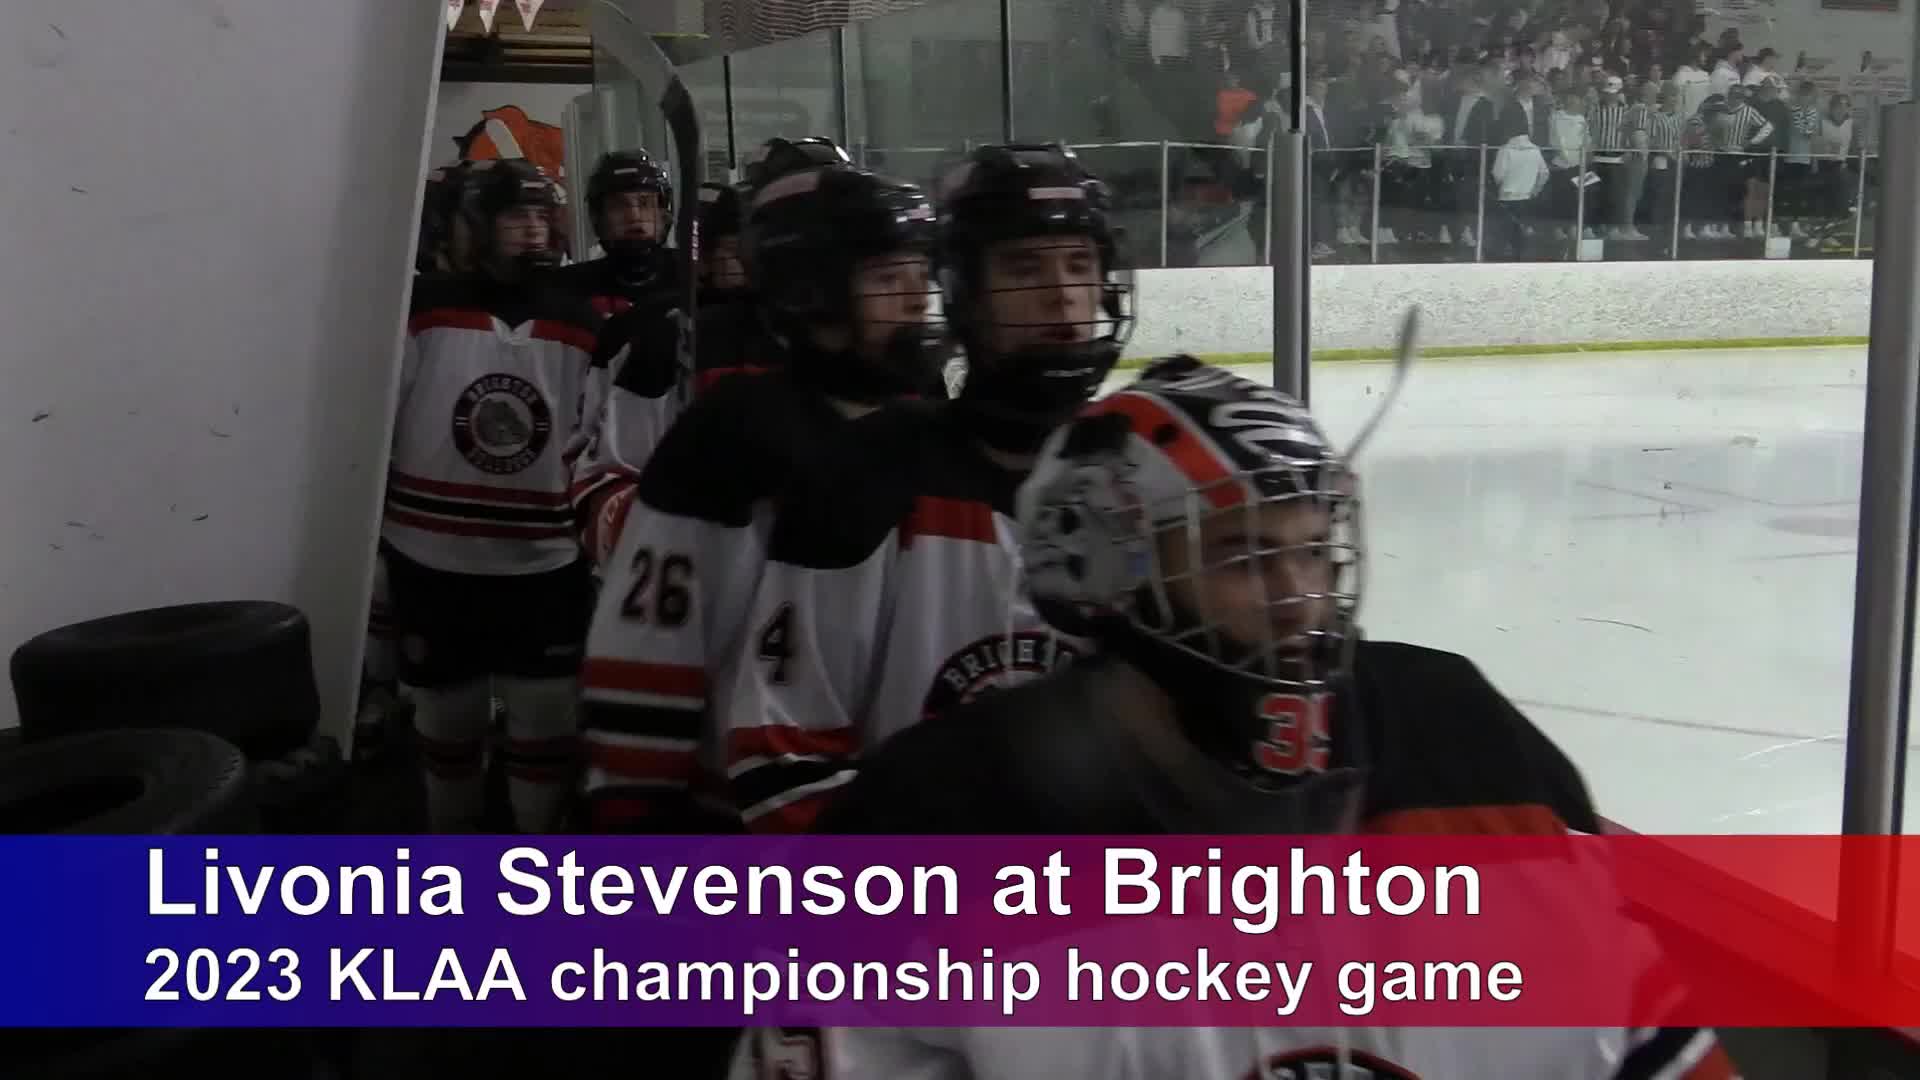 Watch Brighton-Livonia Stevenson KLAA hockey championship highlights